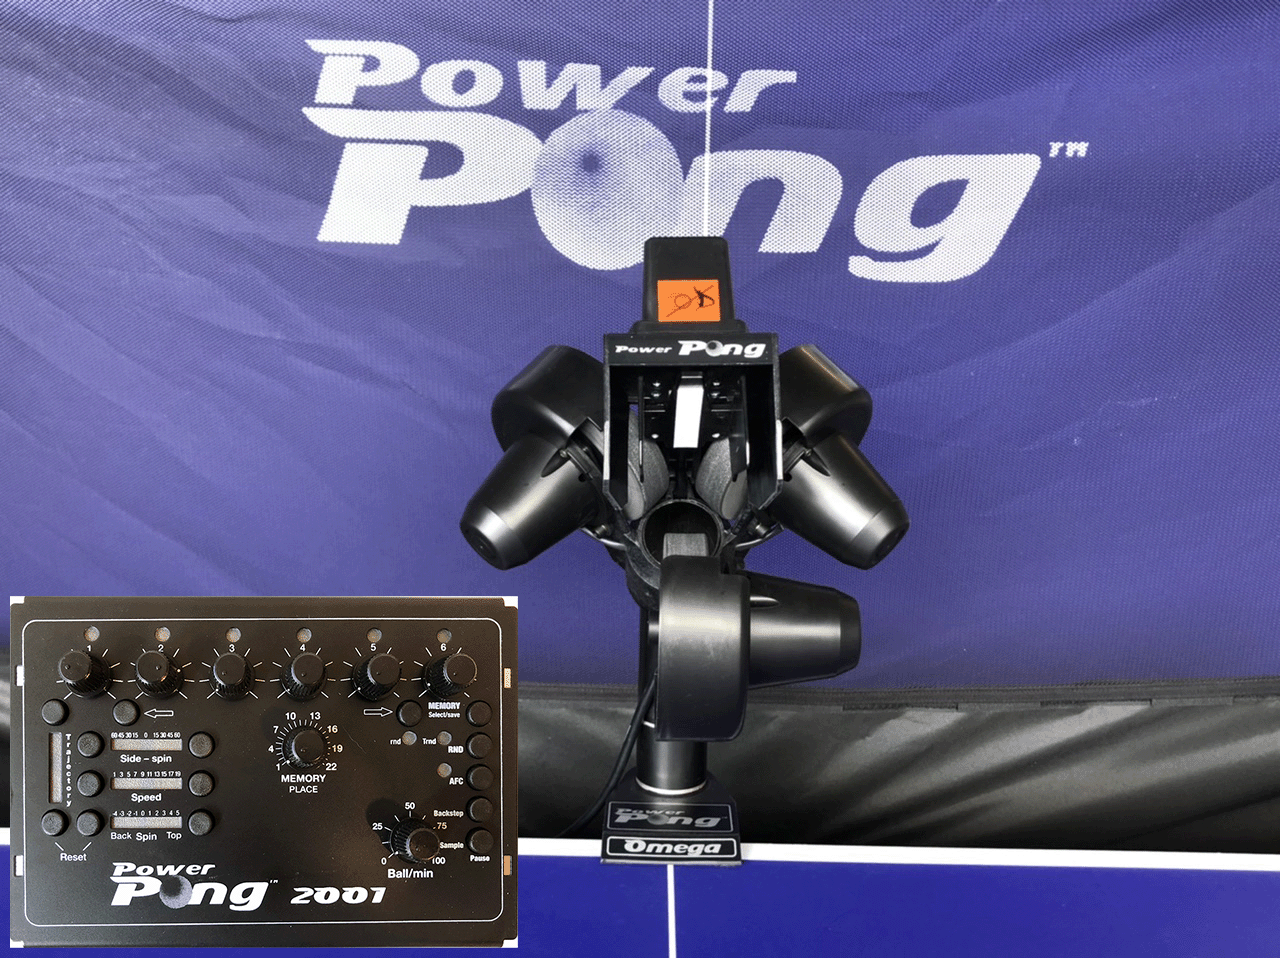 Power Pong